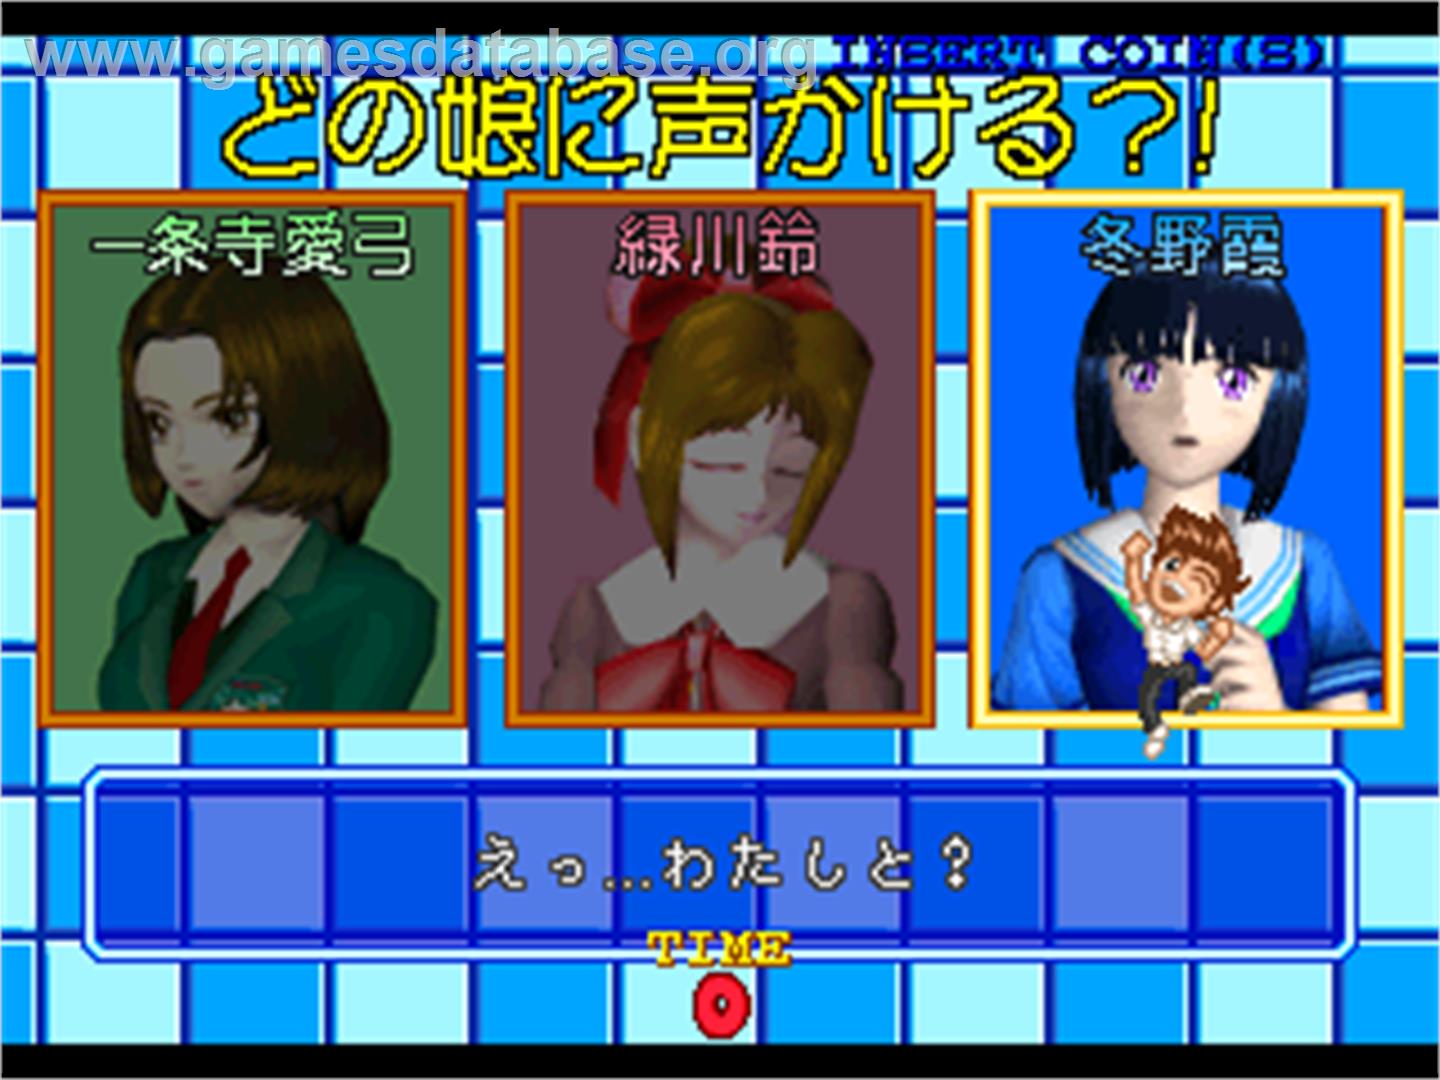 Magical Date / Magical Date - dokidoki kokuhaku daisakusen - Arcade - Artwork - Select Screen